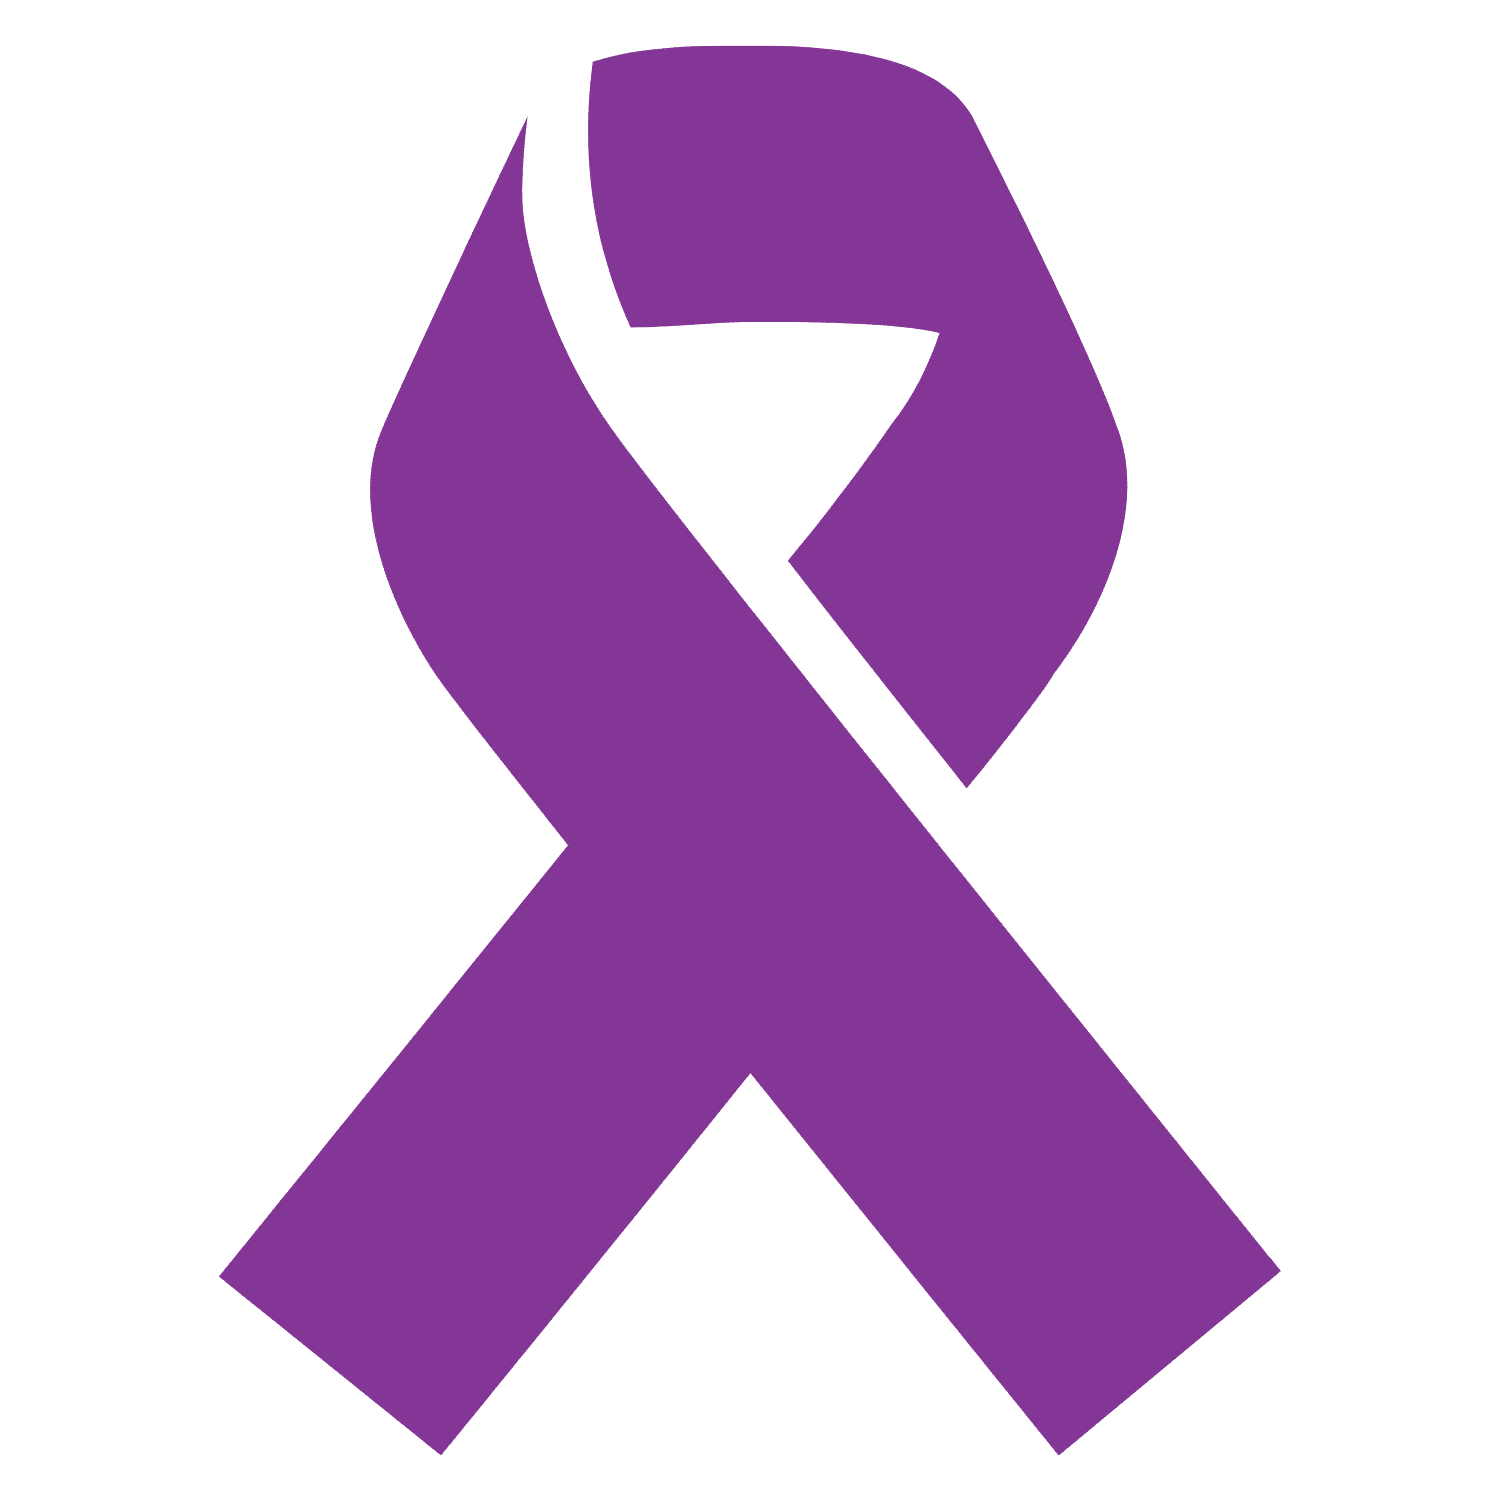 Domestic Violence ribbon